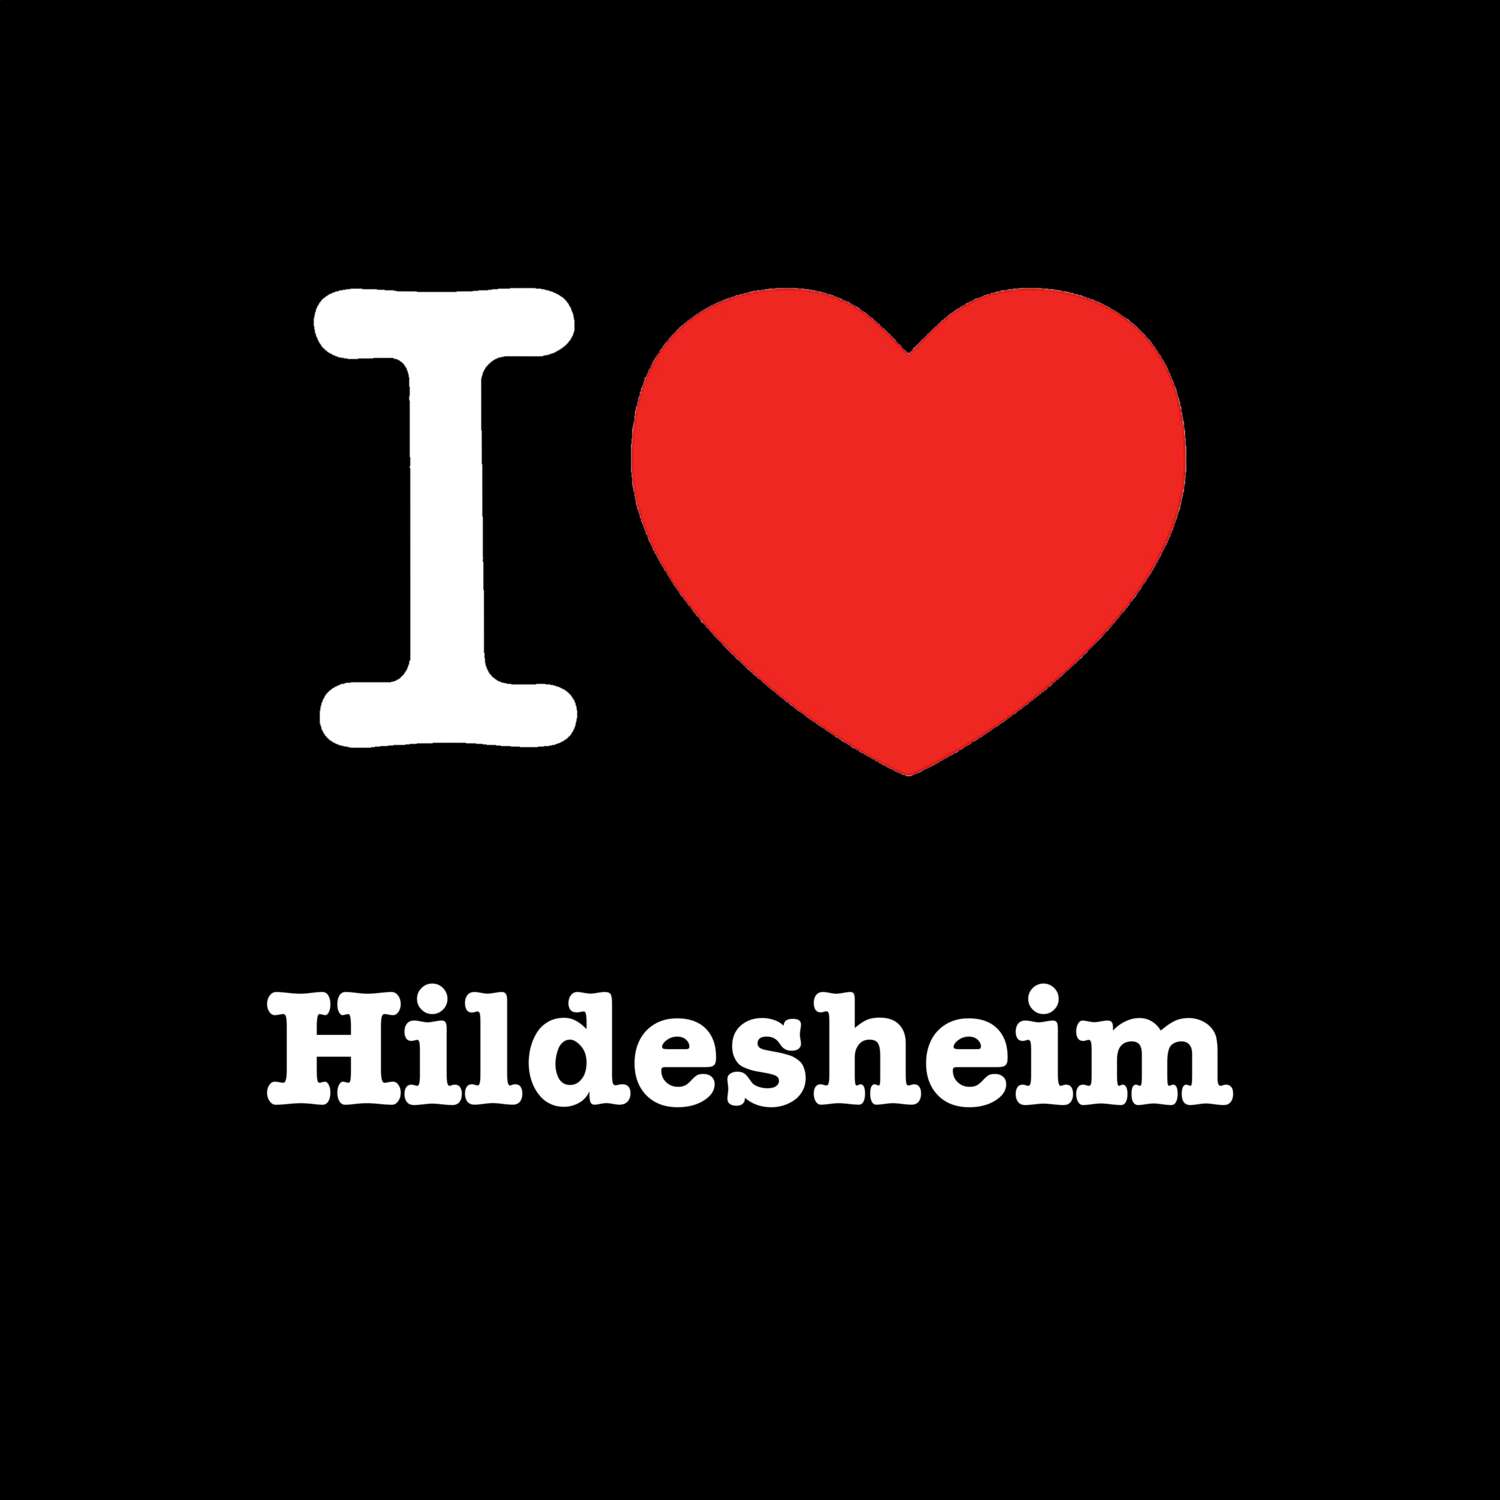 Hildesheim T-Shirt »I love«